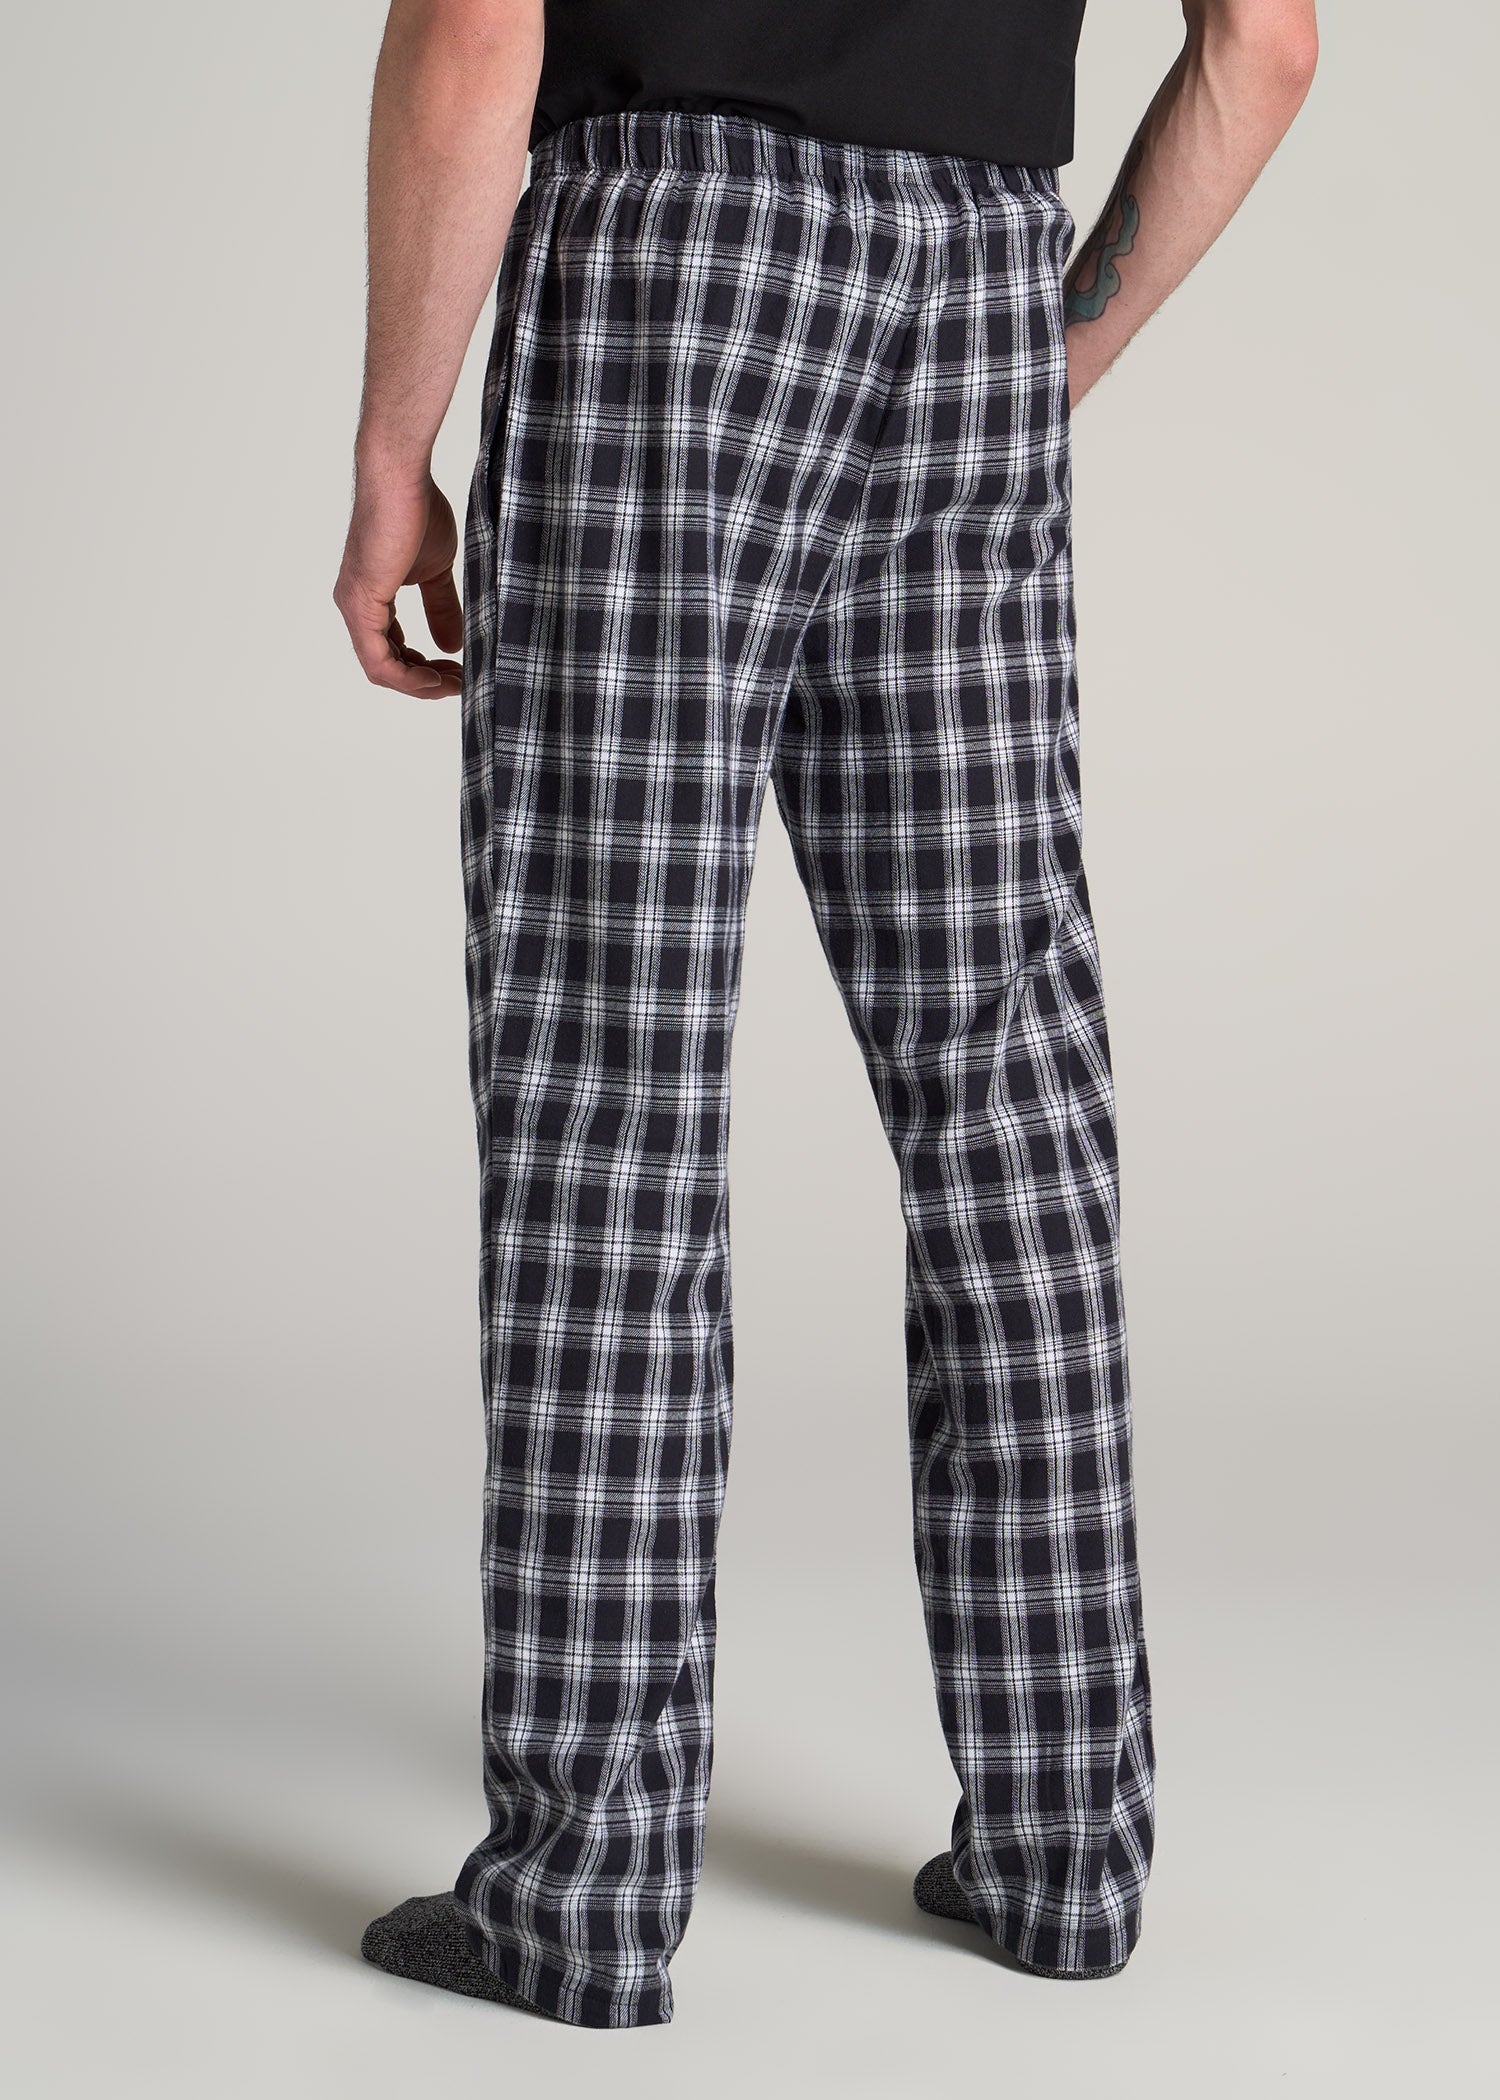 Regular Fit Flannel Pajama Pants - Black/white plaid - Men | H&M US